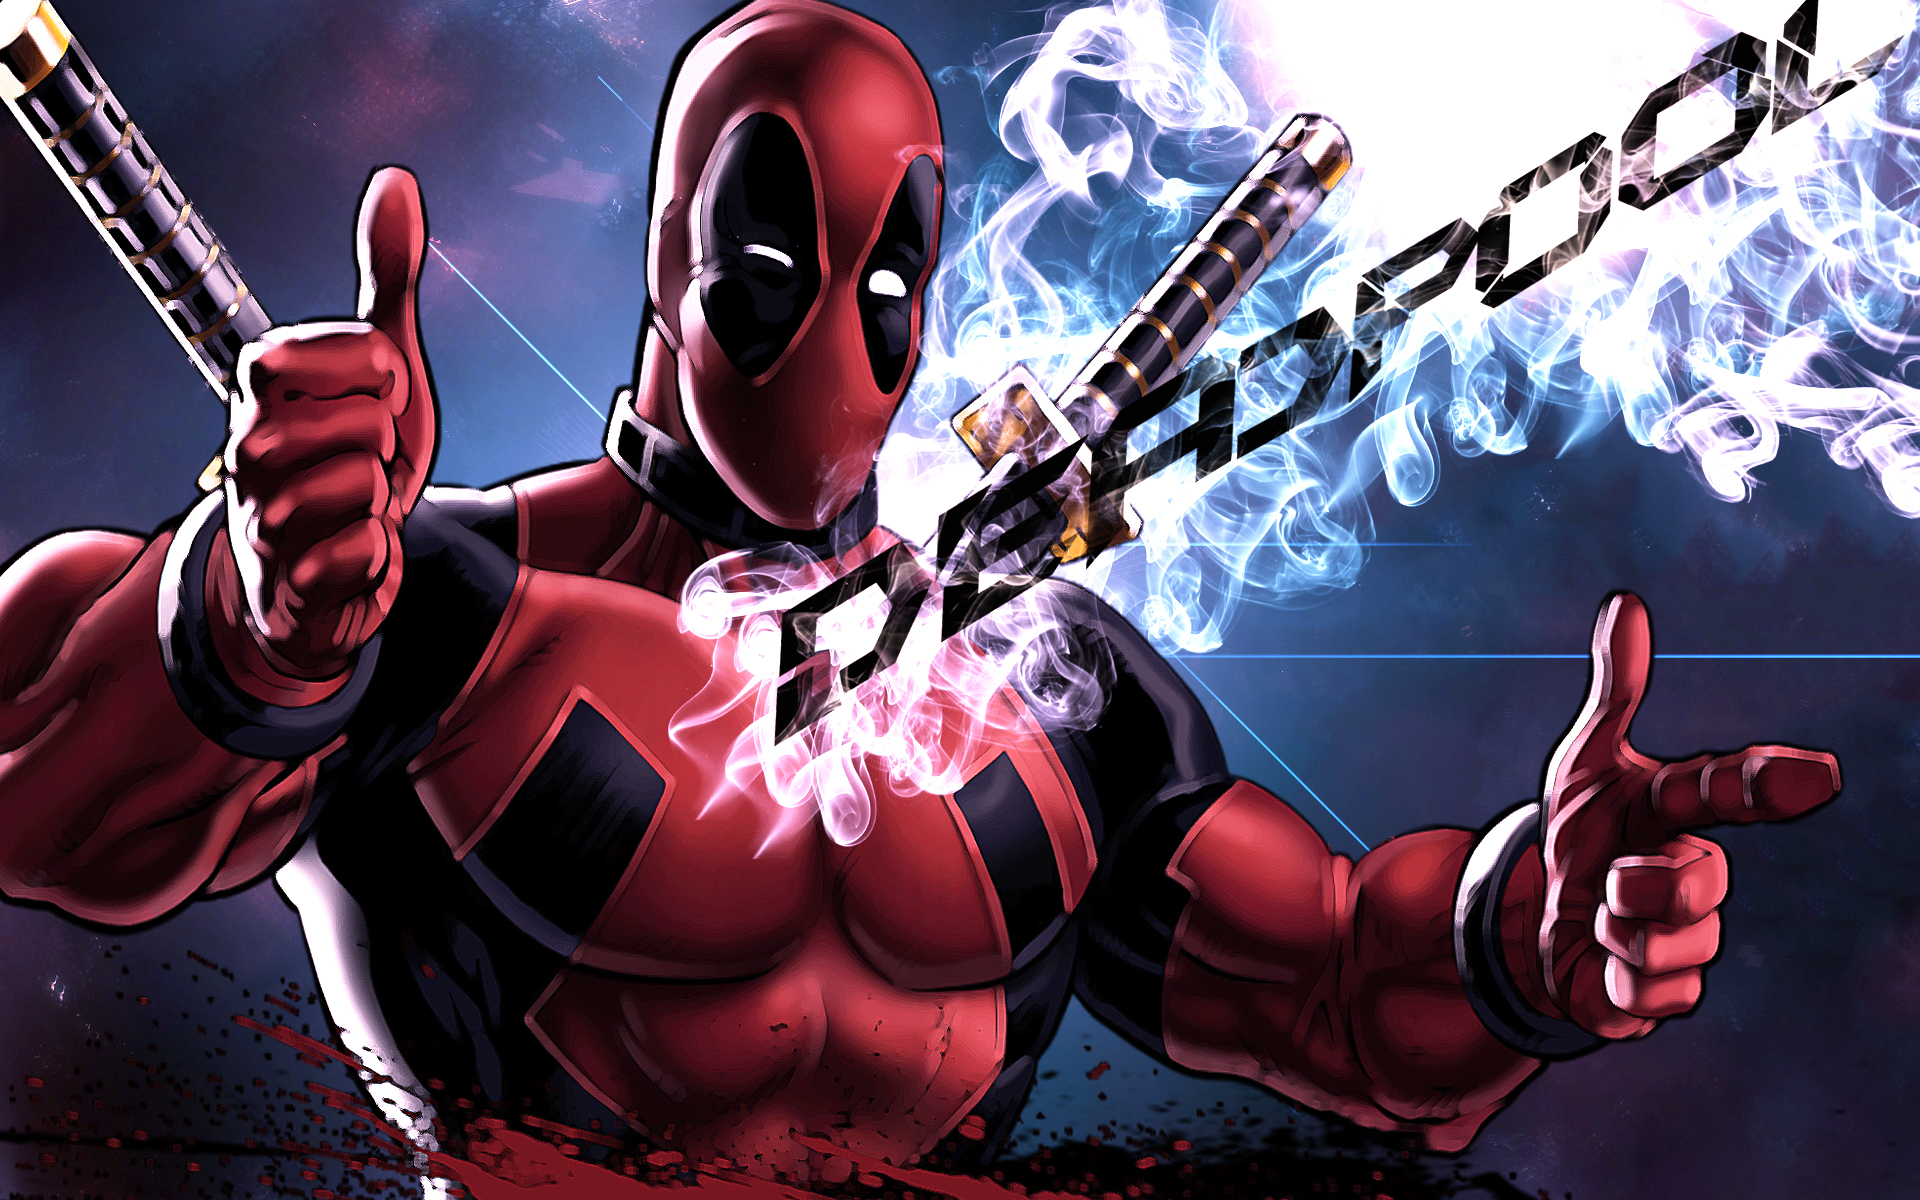 Cool Deadpool Wallpaper HD download free